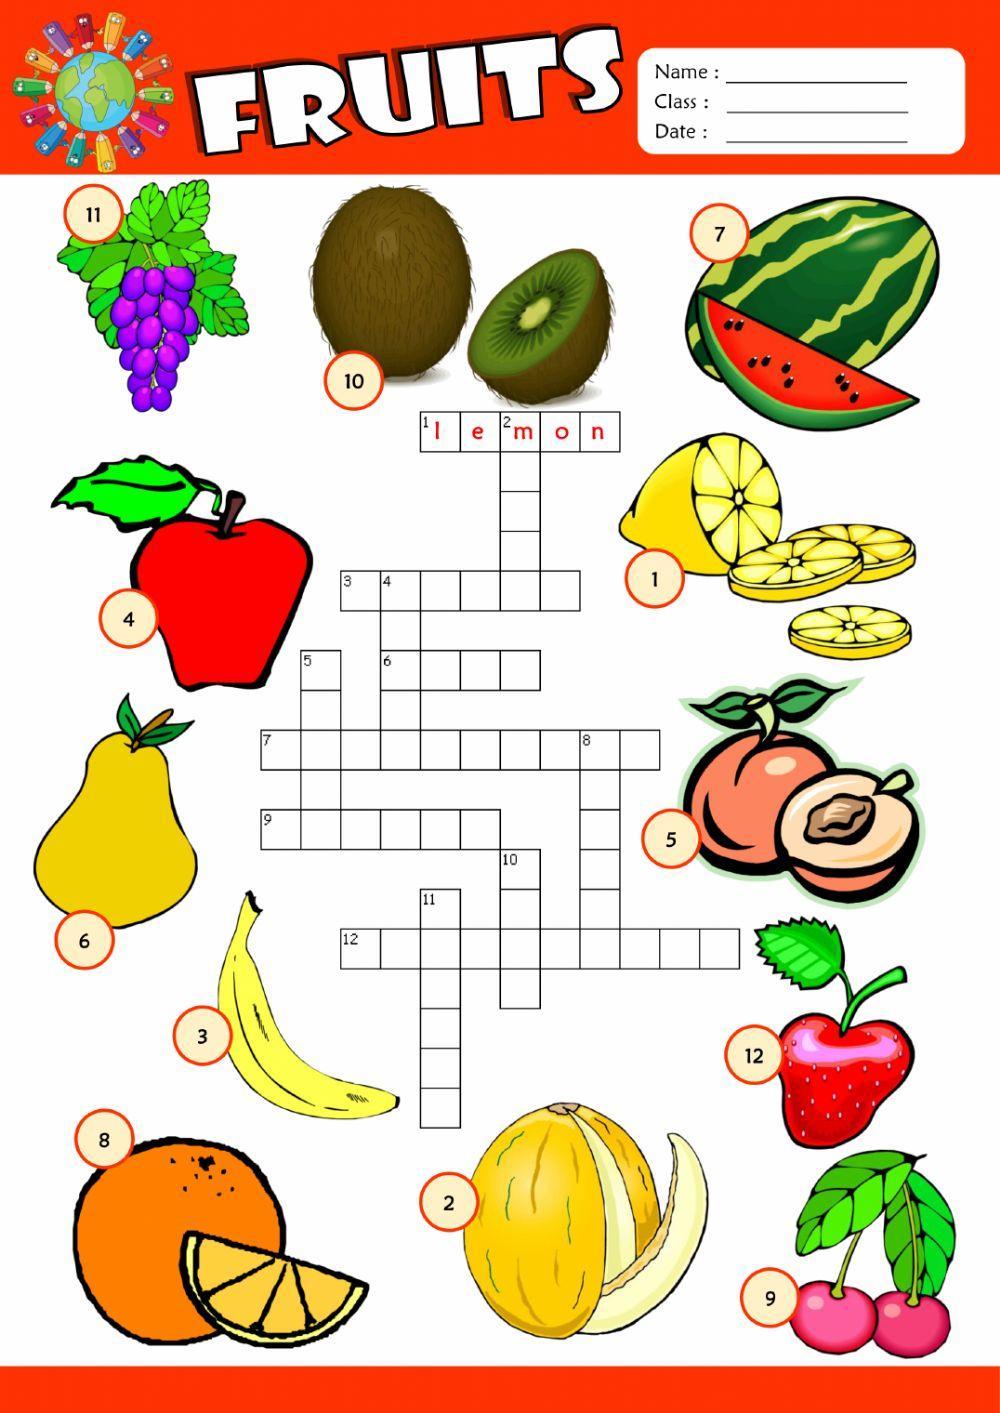 Fruit crossword puzzle